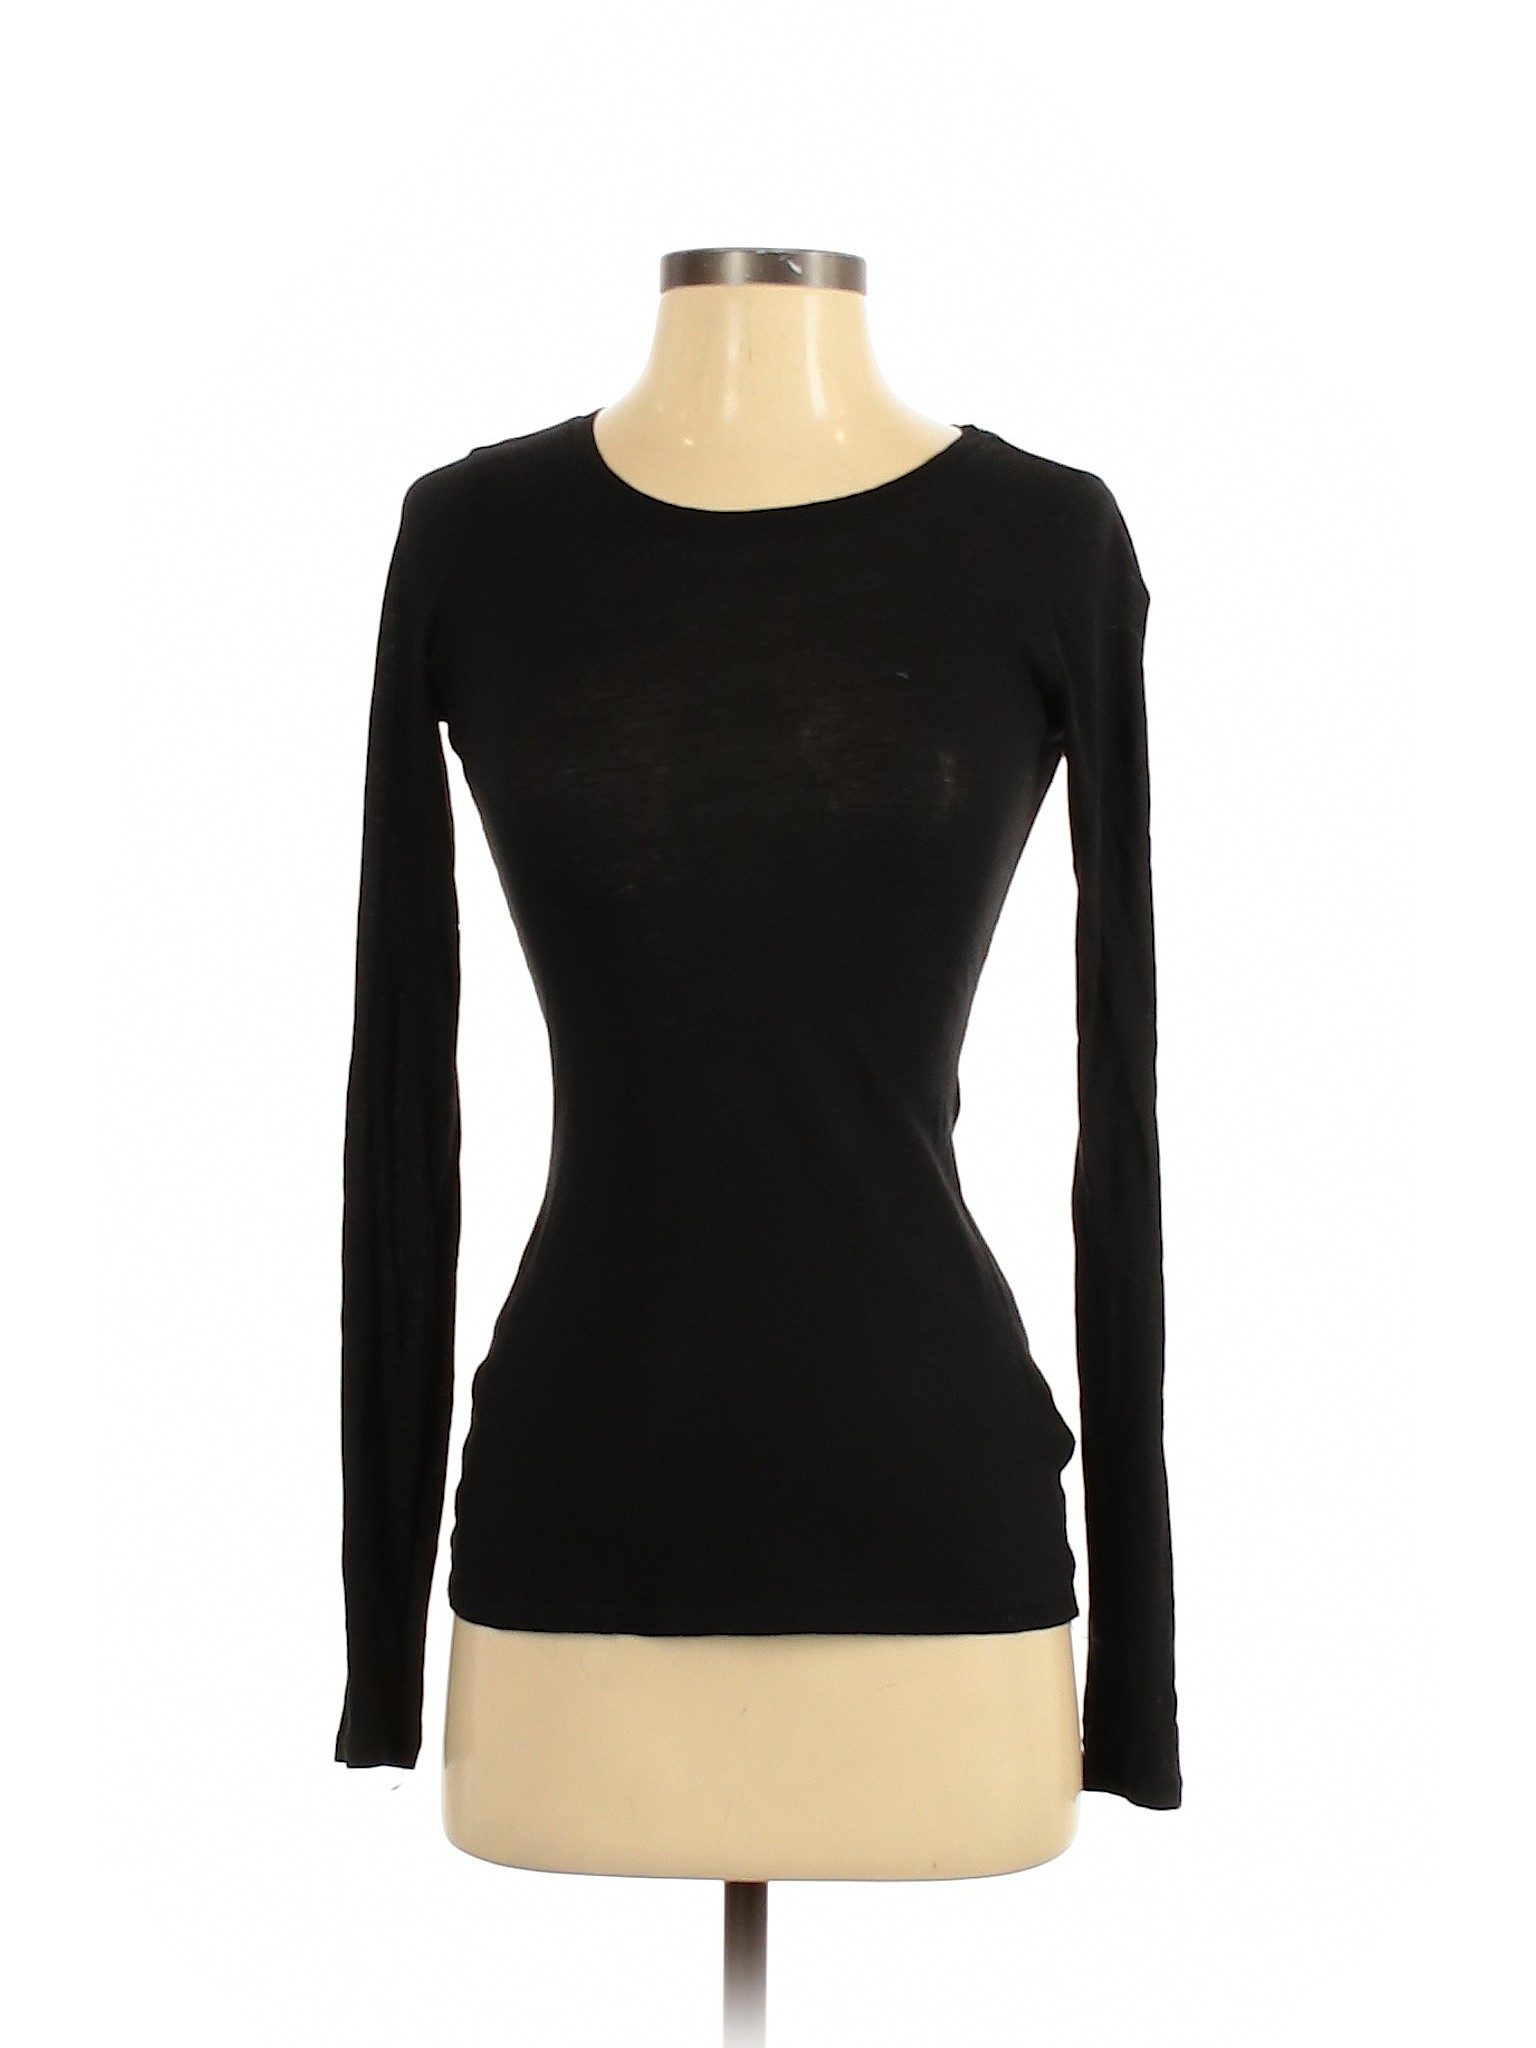 Express Women Black Long Sleeve T-Shirt XS | eBay